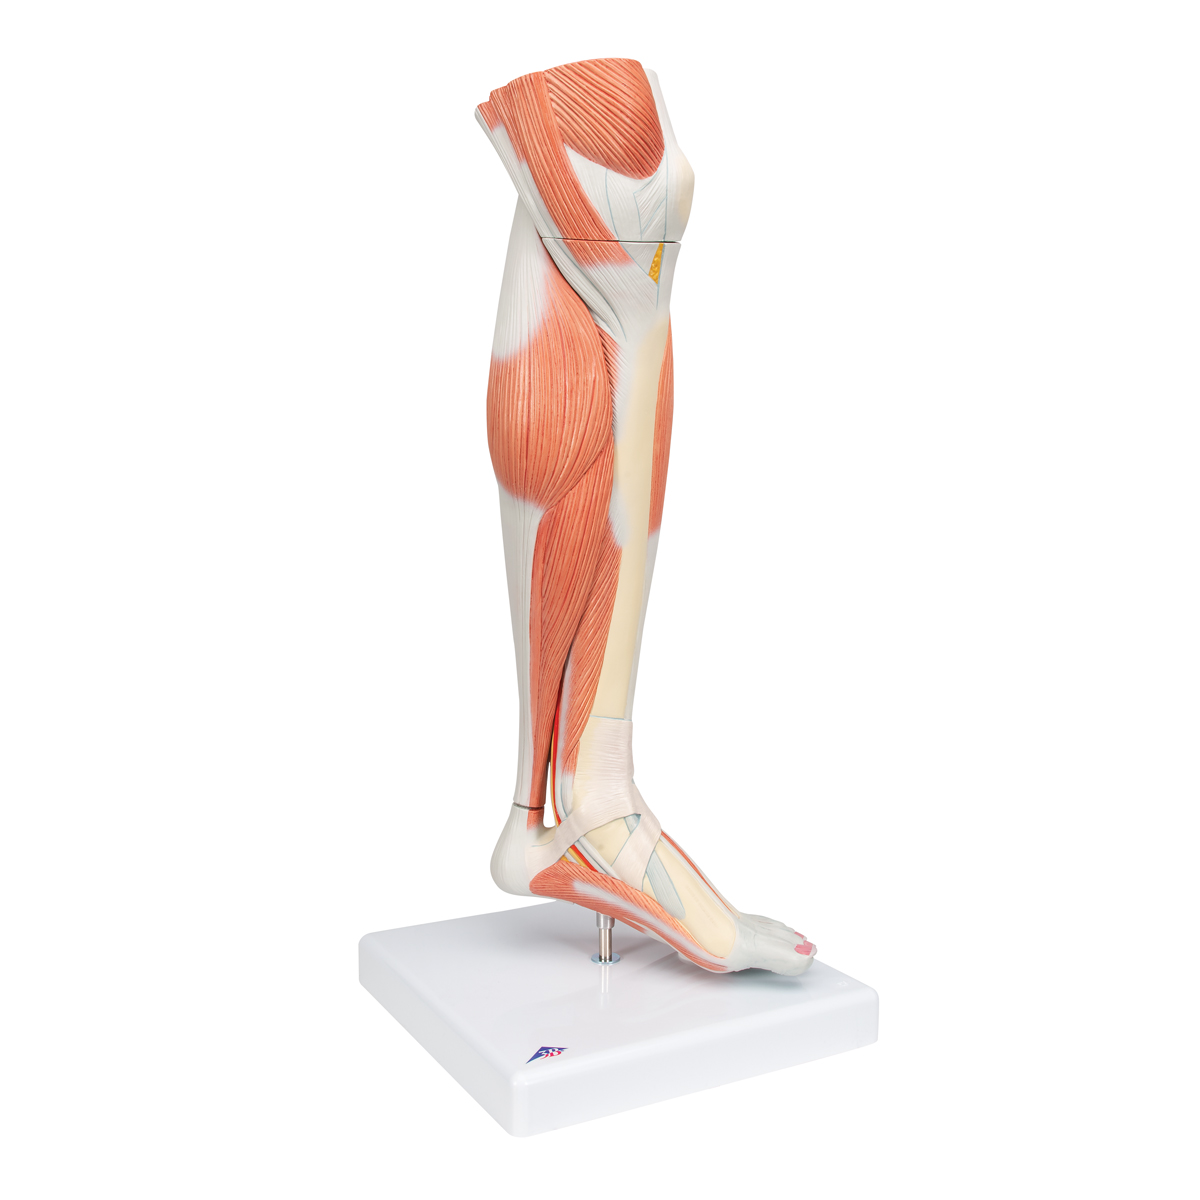 Anatomical Teaching Models - Plastic Human Muscle Models - Lower